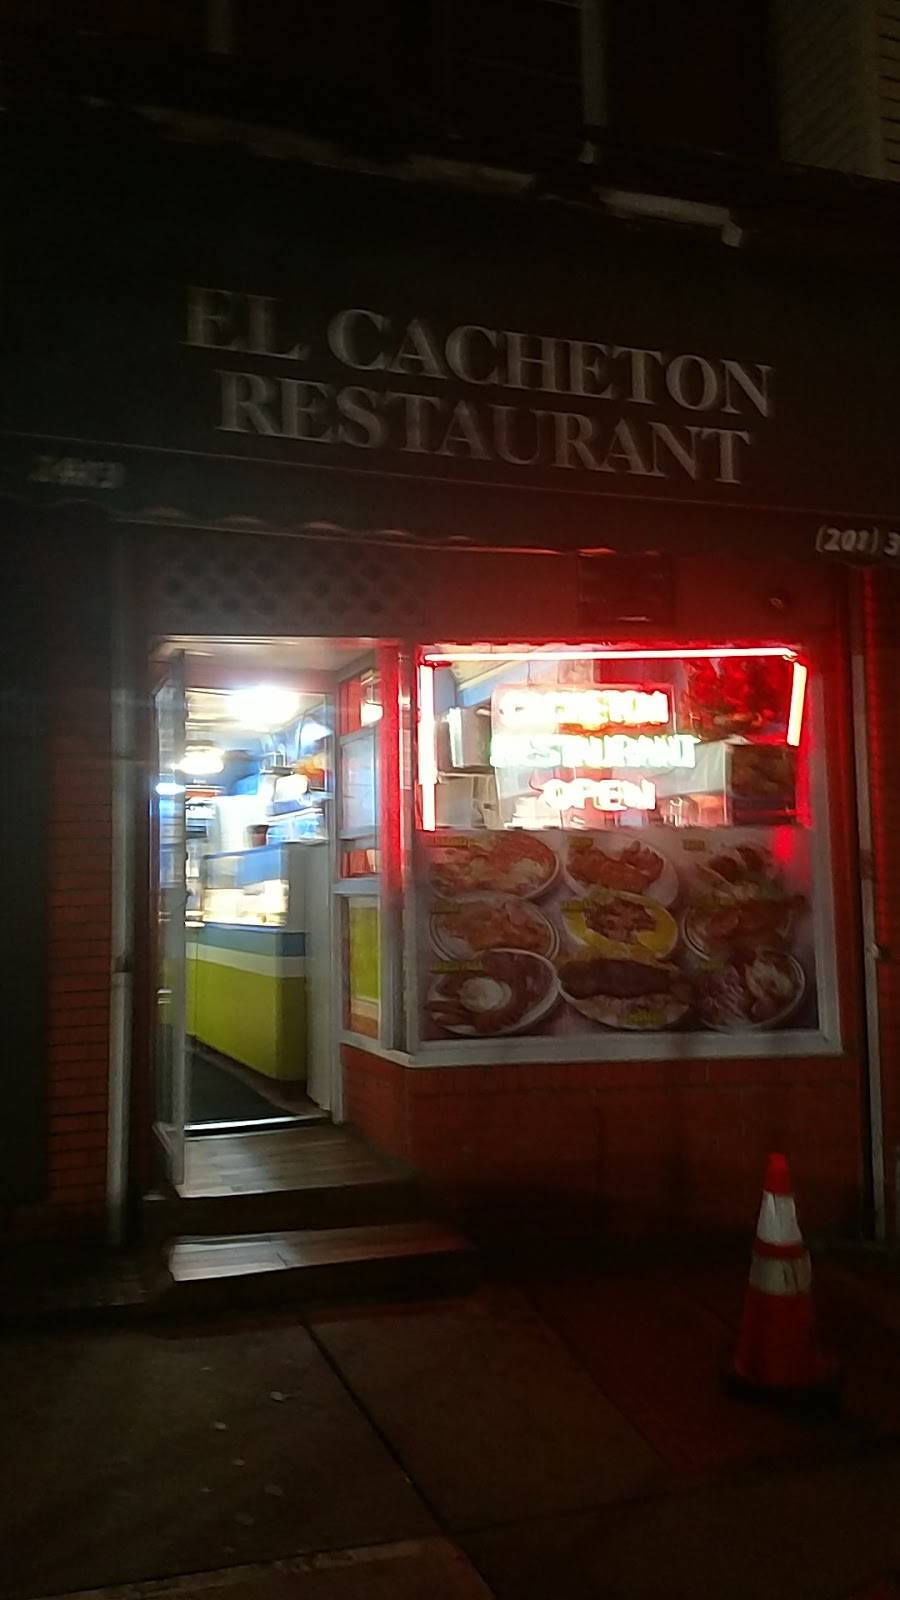 El Cacheton Del Atlantico | restaurant | 2413 Bergenline Ave, Union City, NJ 07087, USA | 2013486411 OR +1 201-348-6411